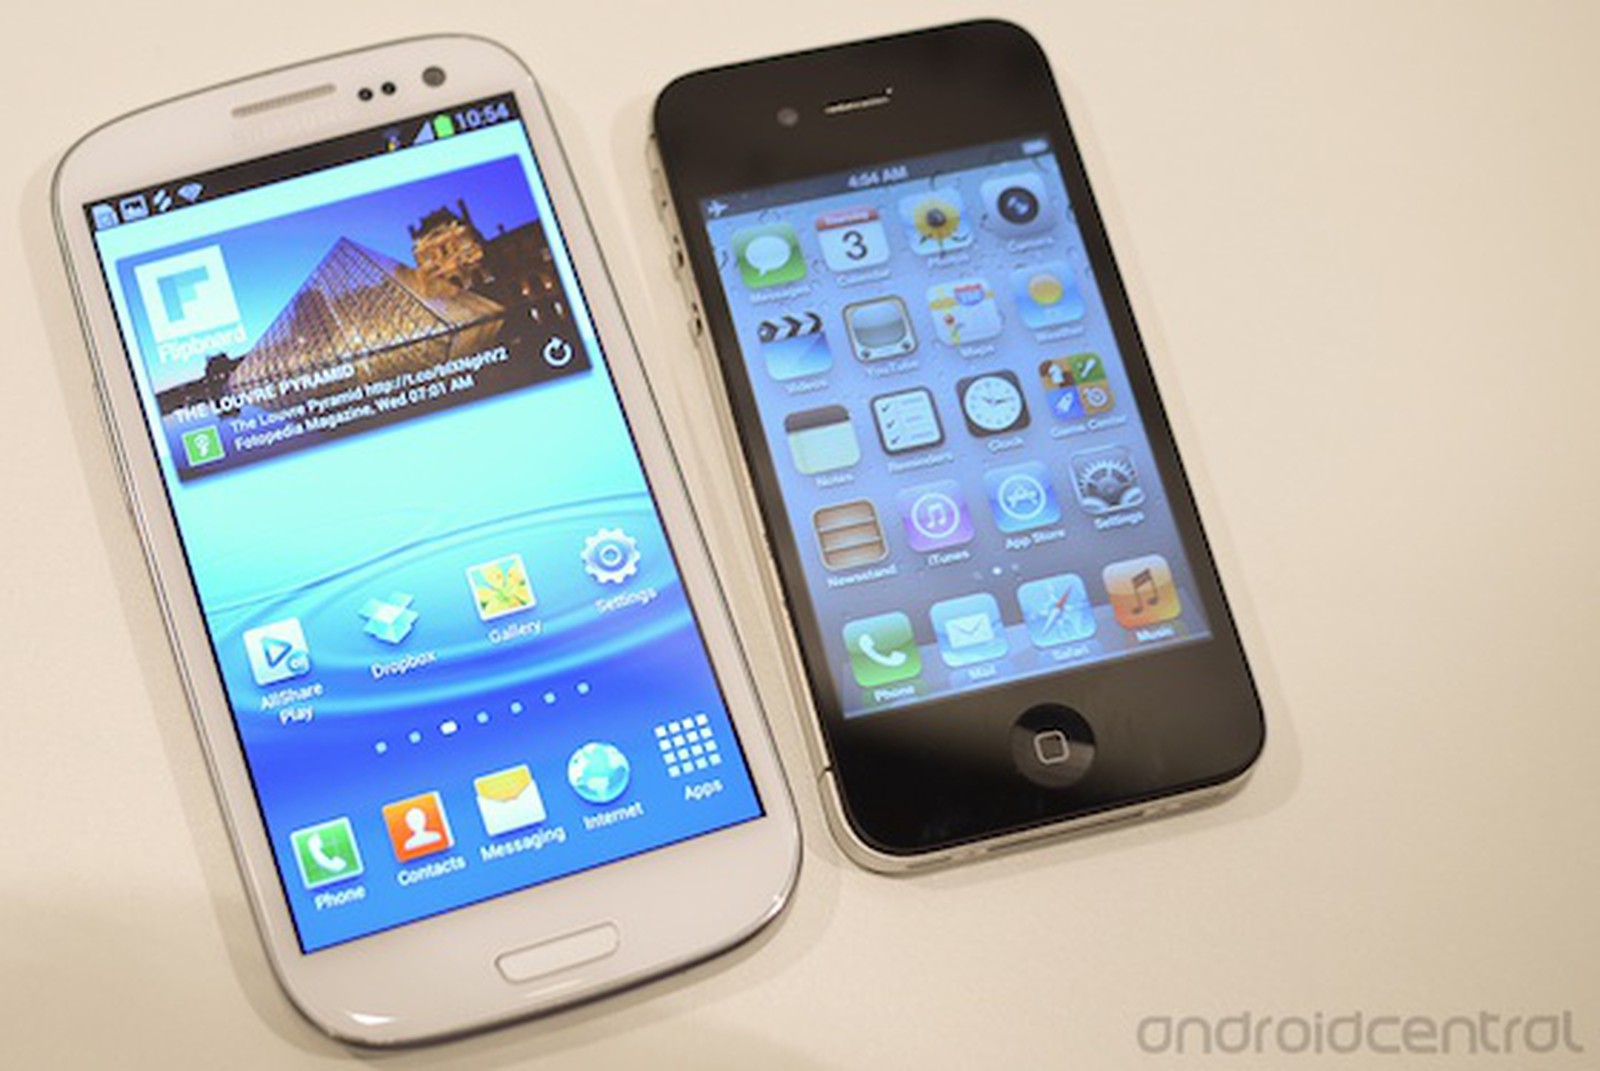 Айфон галакси 4. Iphone Samsung s3. Samsung Galaxy s III И iphone 4. Samsung Galaxy s и iphone 3g. Galaxy 3 айфон.